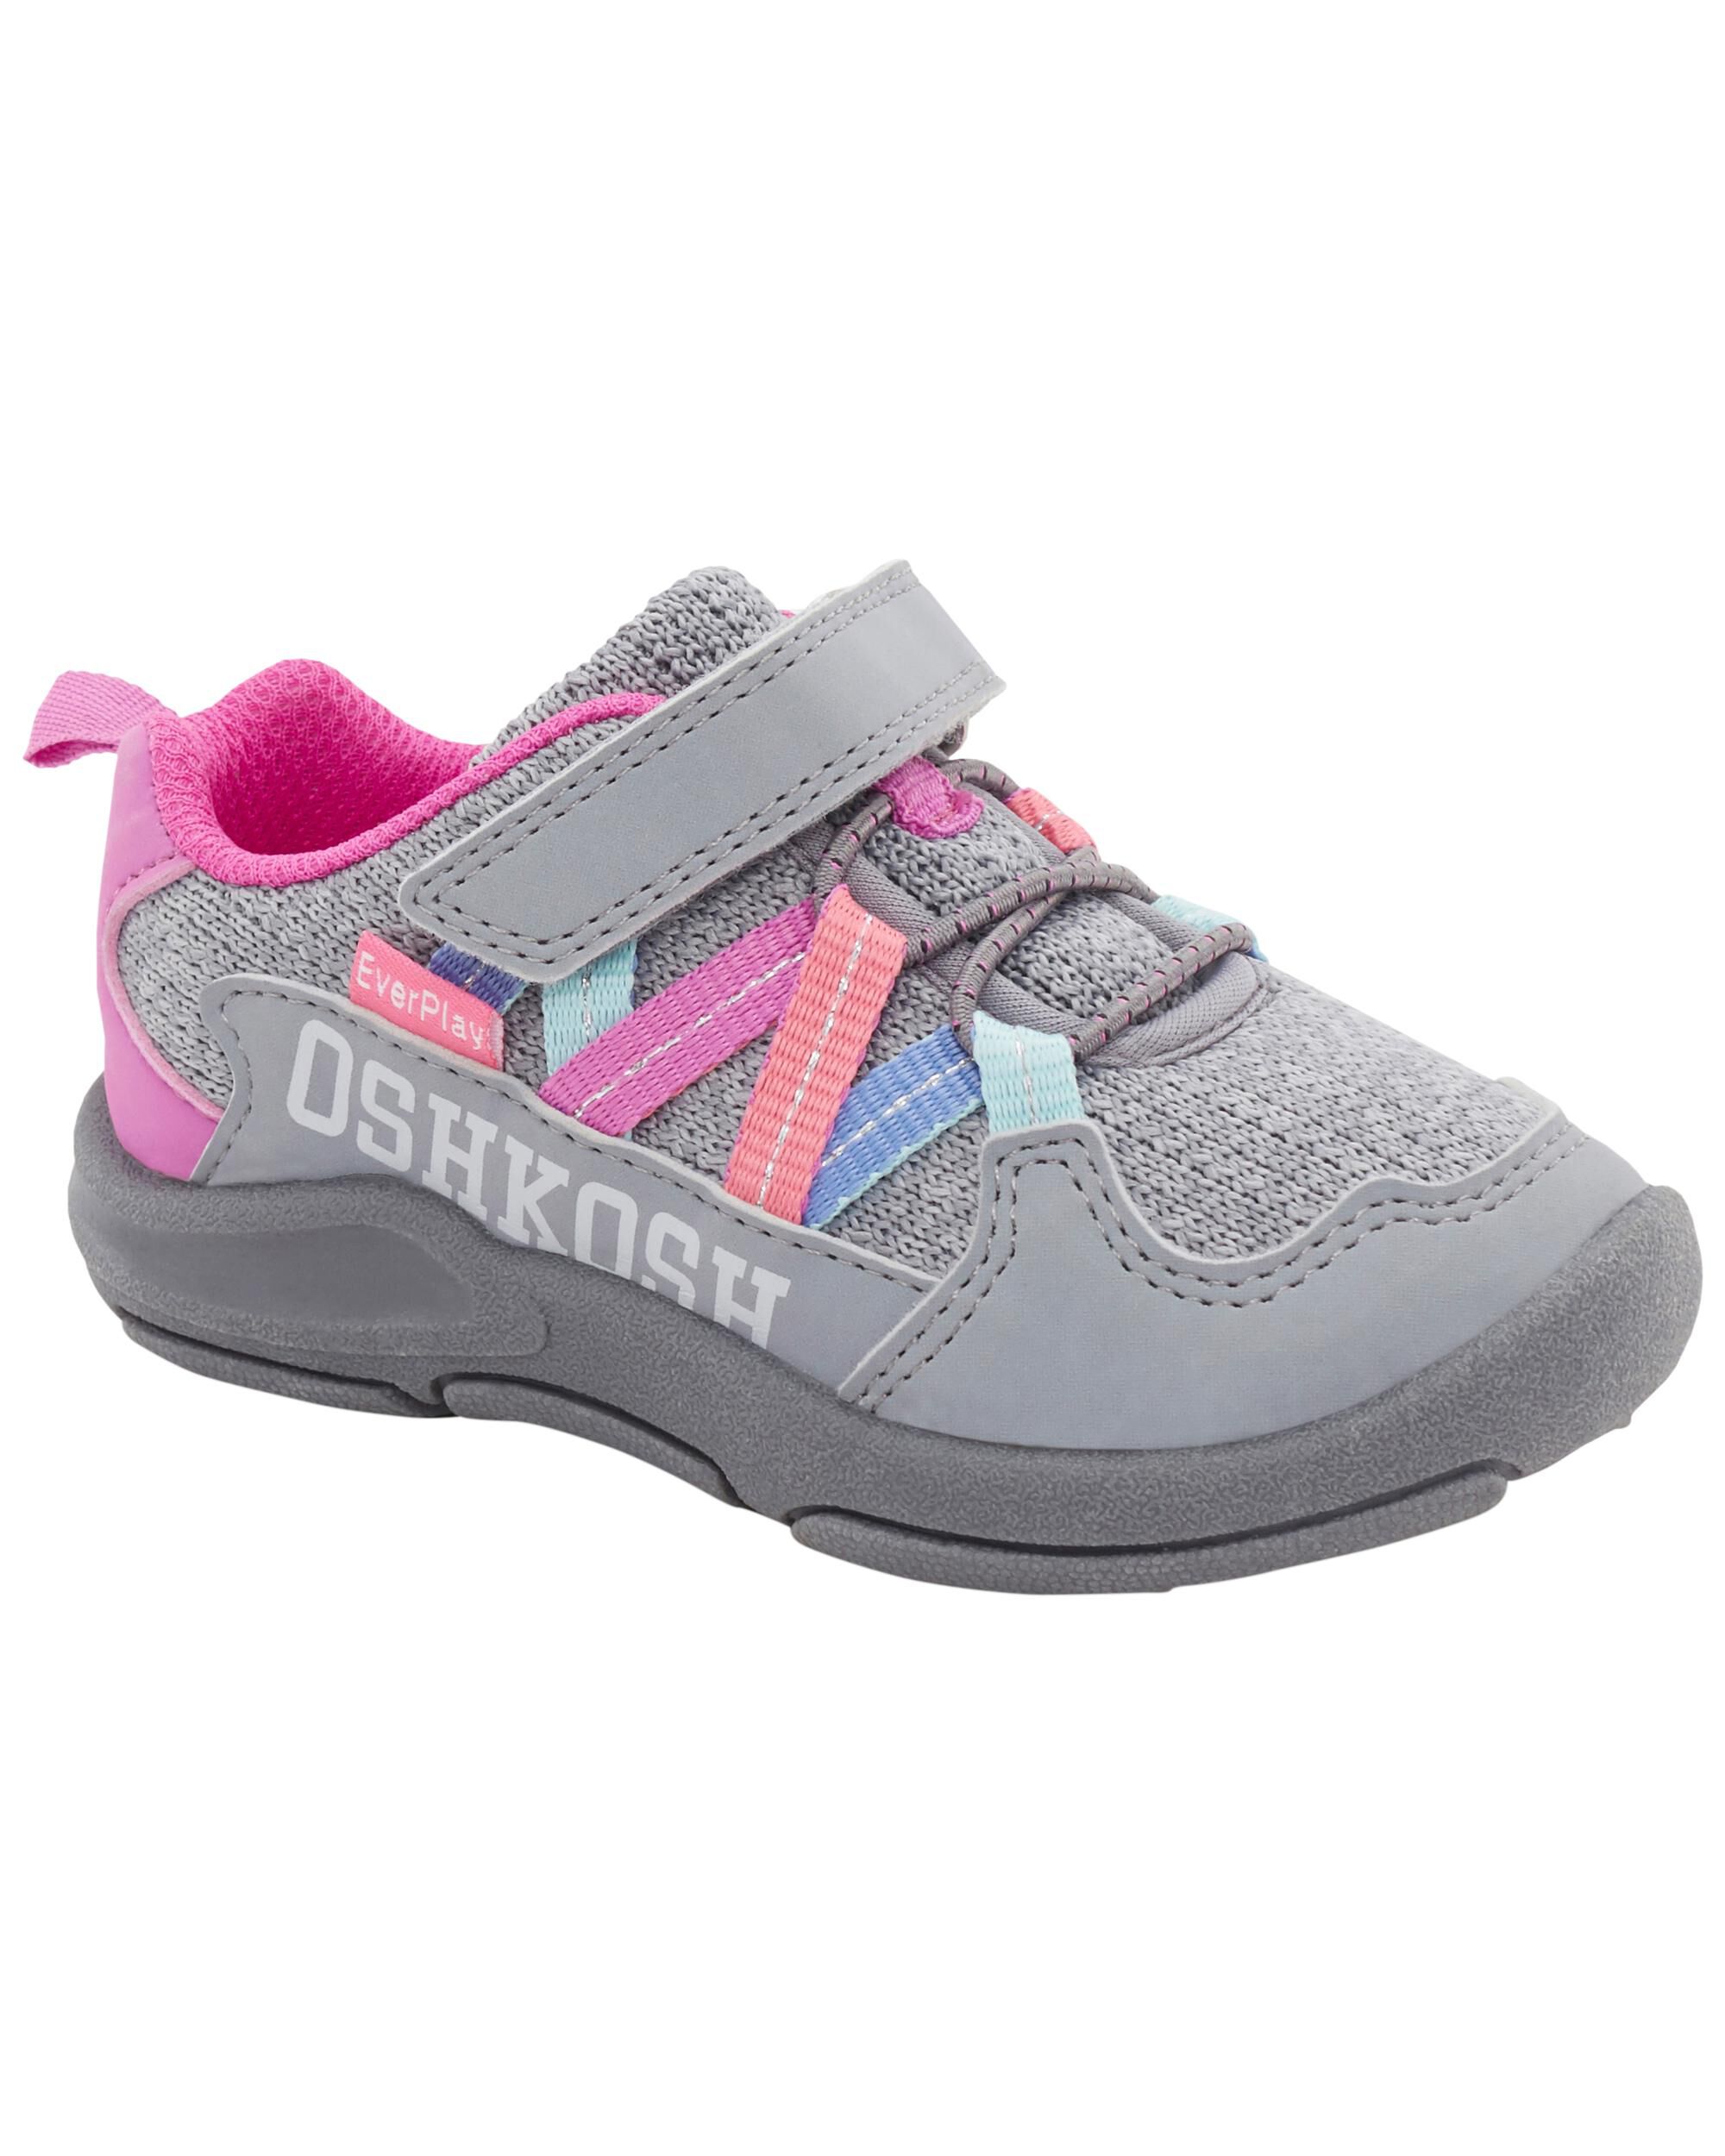 OshKosh B'gosh Toddler Girl's Evie Blue High Top Sneakers Assorted Sizes NWB 